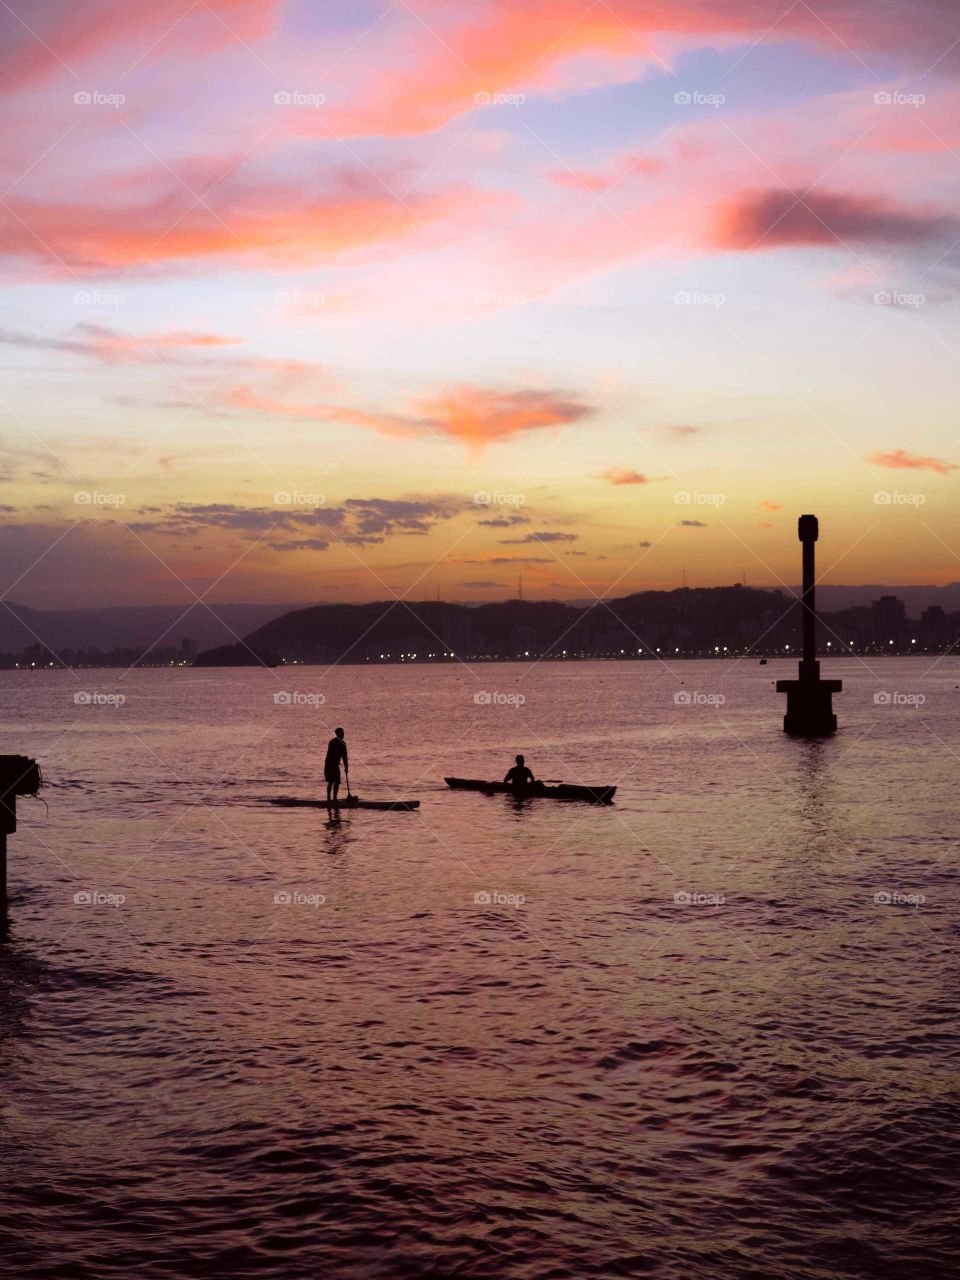 Sailing/surfing/kayaking men at Santo's Bay, Brazil. Beautiful Sunset,  with purple and orange tones.